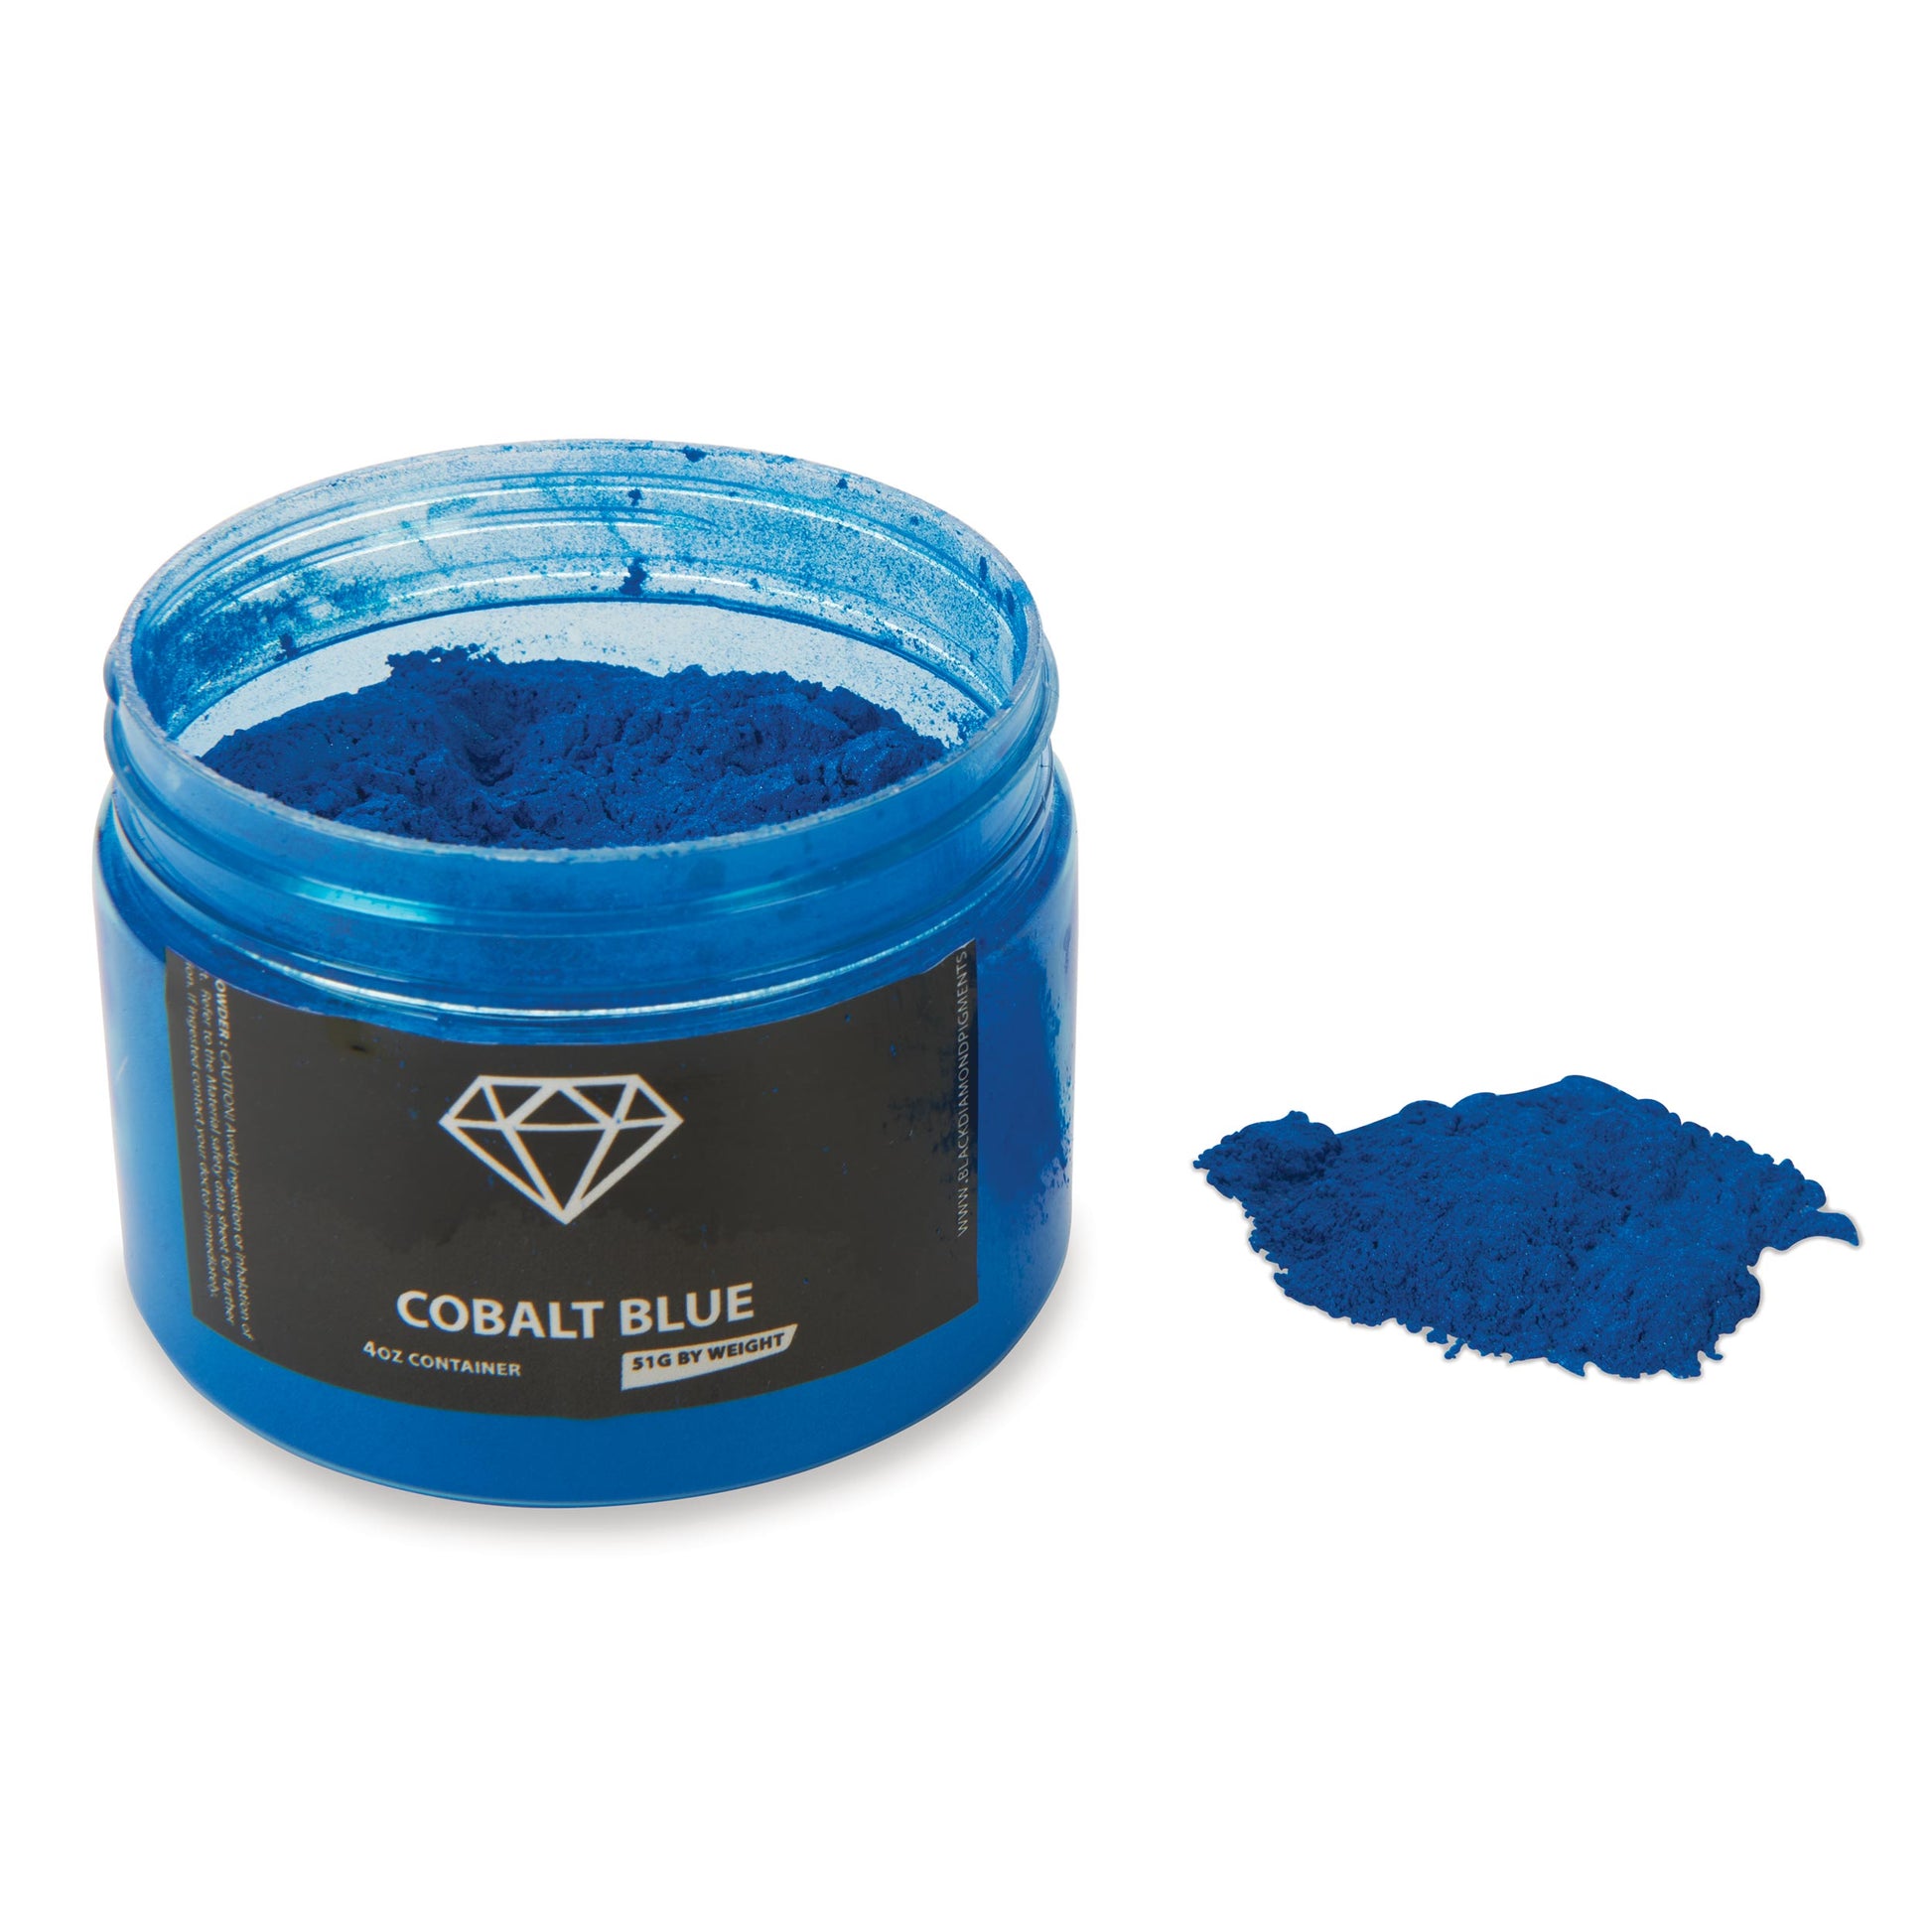 Cobalt Blue 51 Grams alt 0